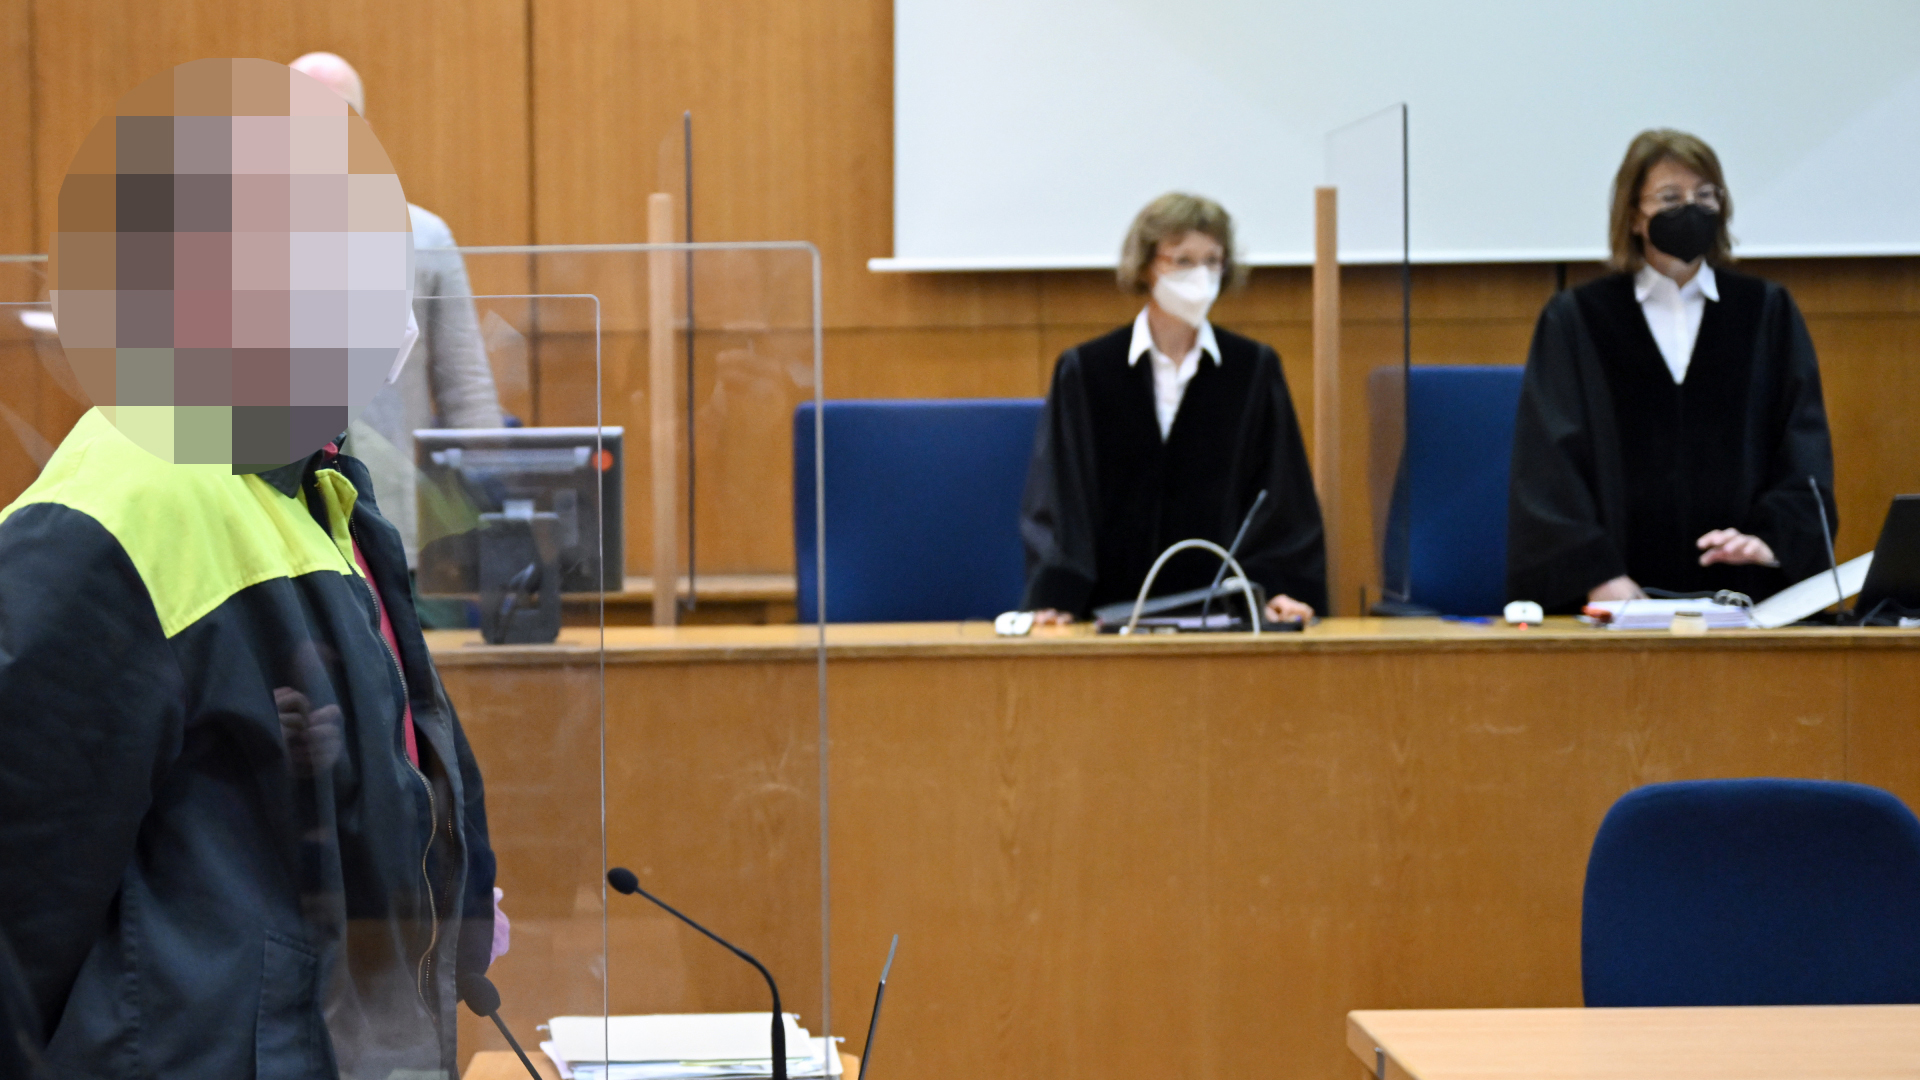 Prozessauftakt vor dem Landgericht Frankfurt am Main wegen der "NSU 2.0"-Drohschreiben | dpa